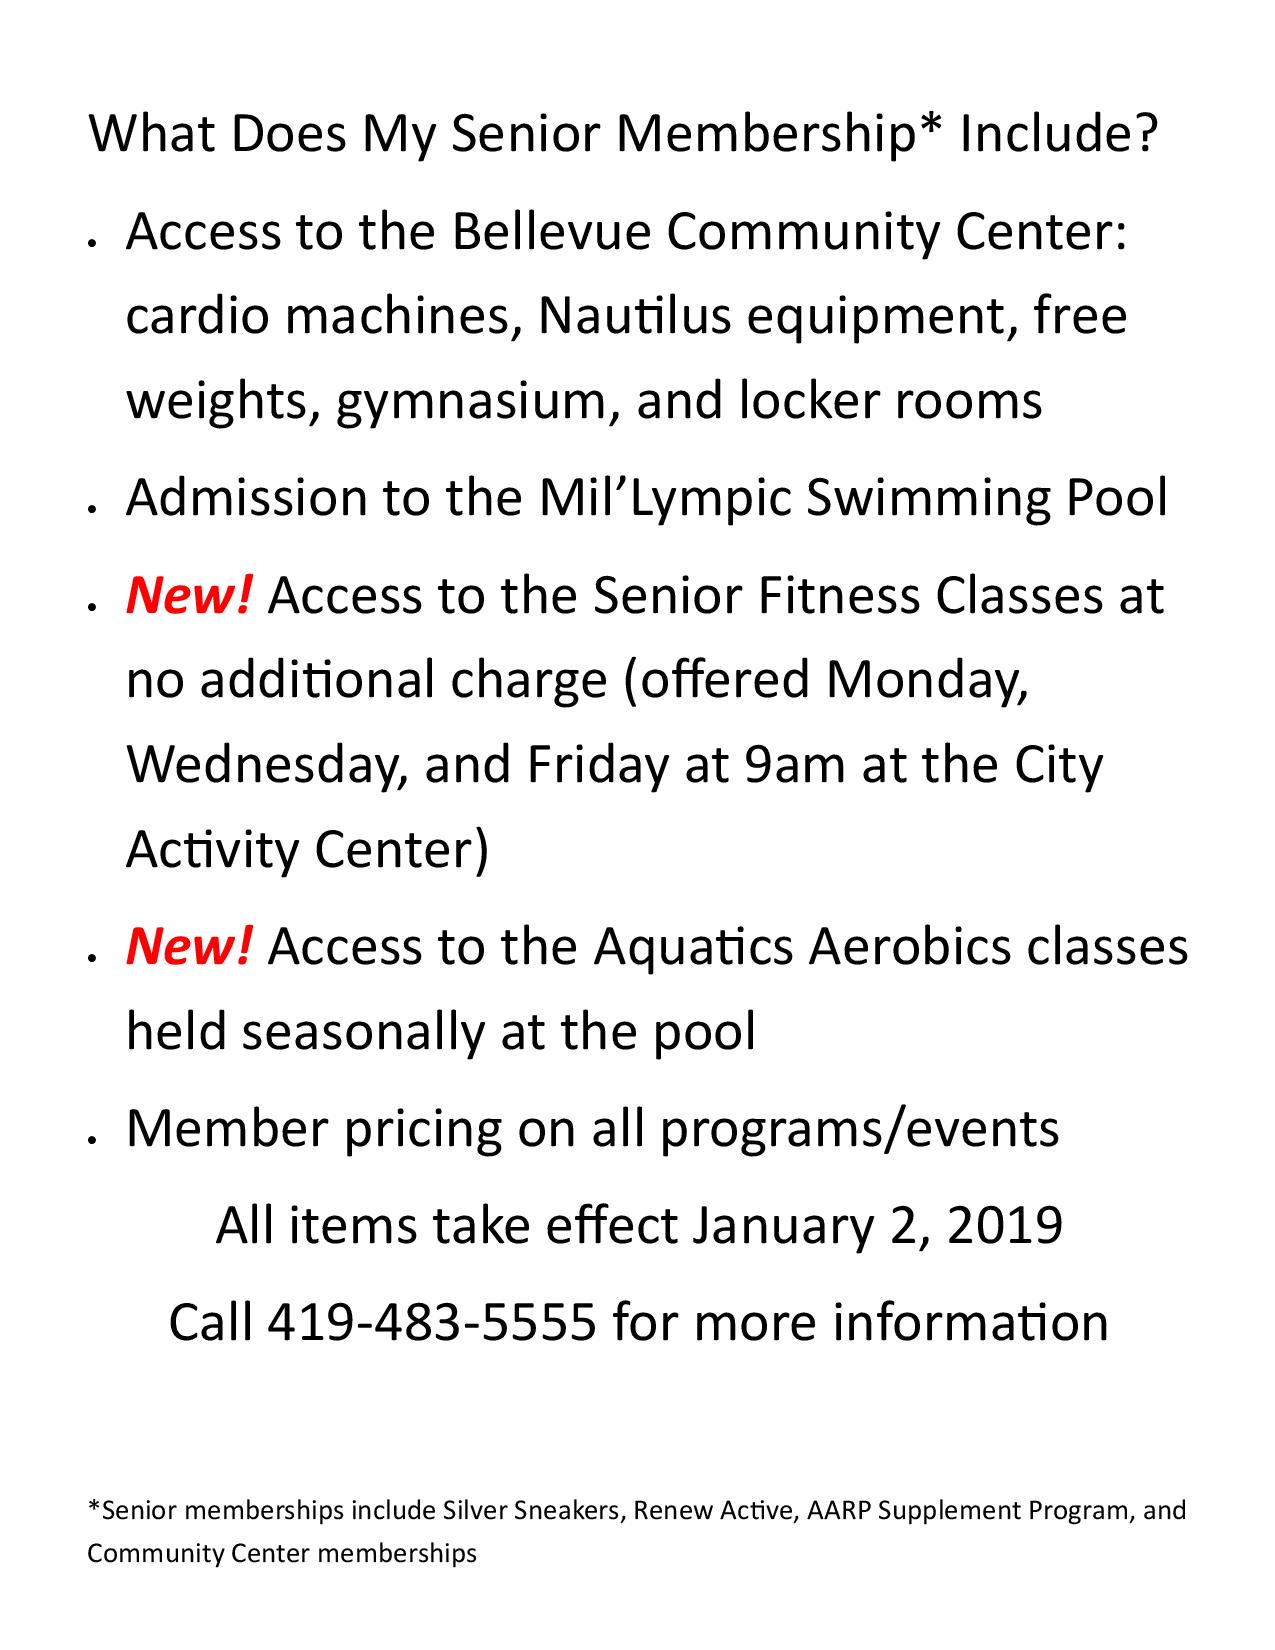 Senior Center Activities for January 2019